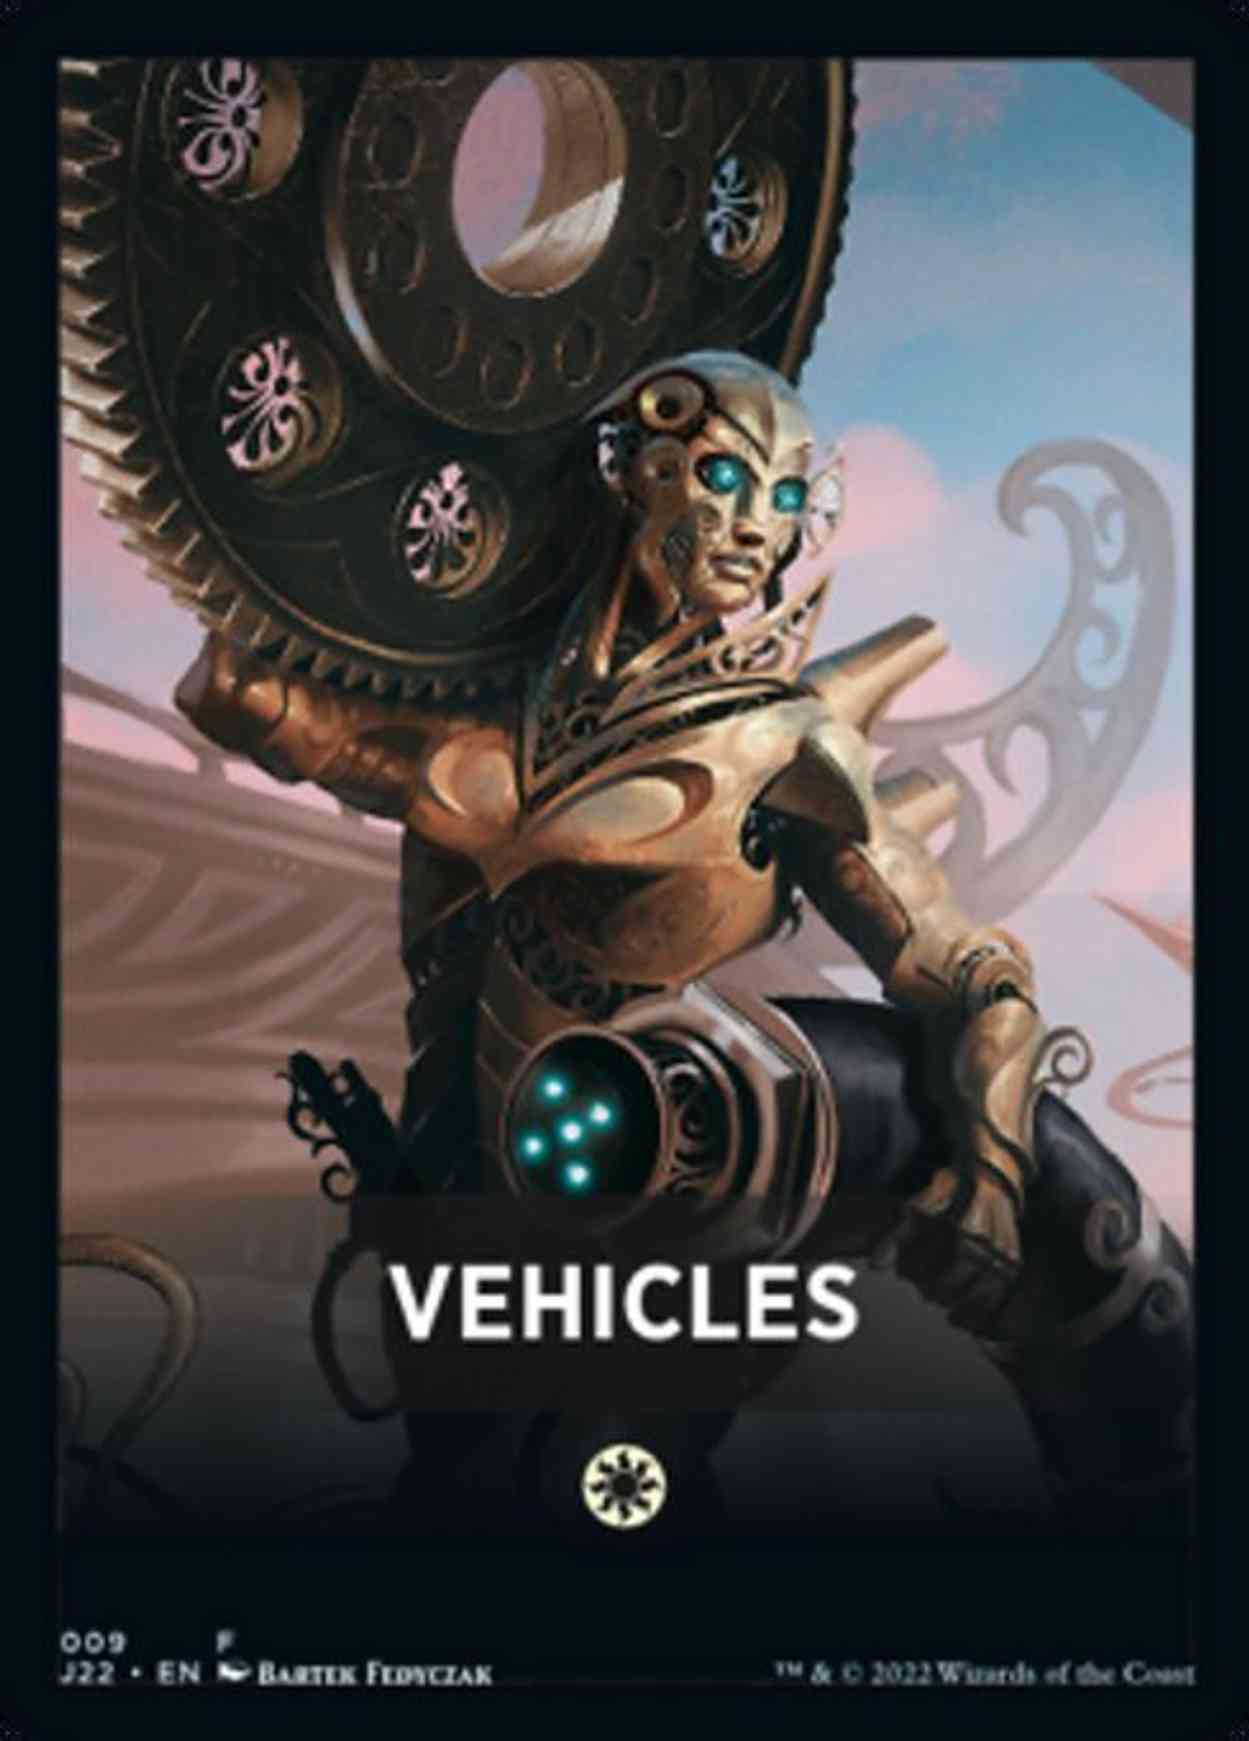 Vehicles Theme Card magic card front